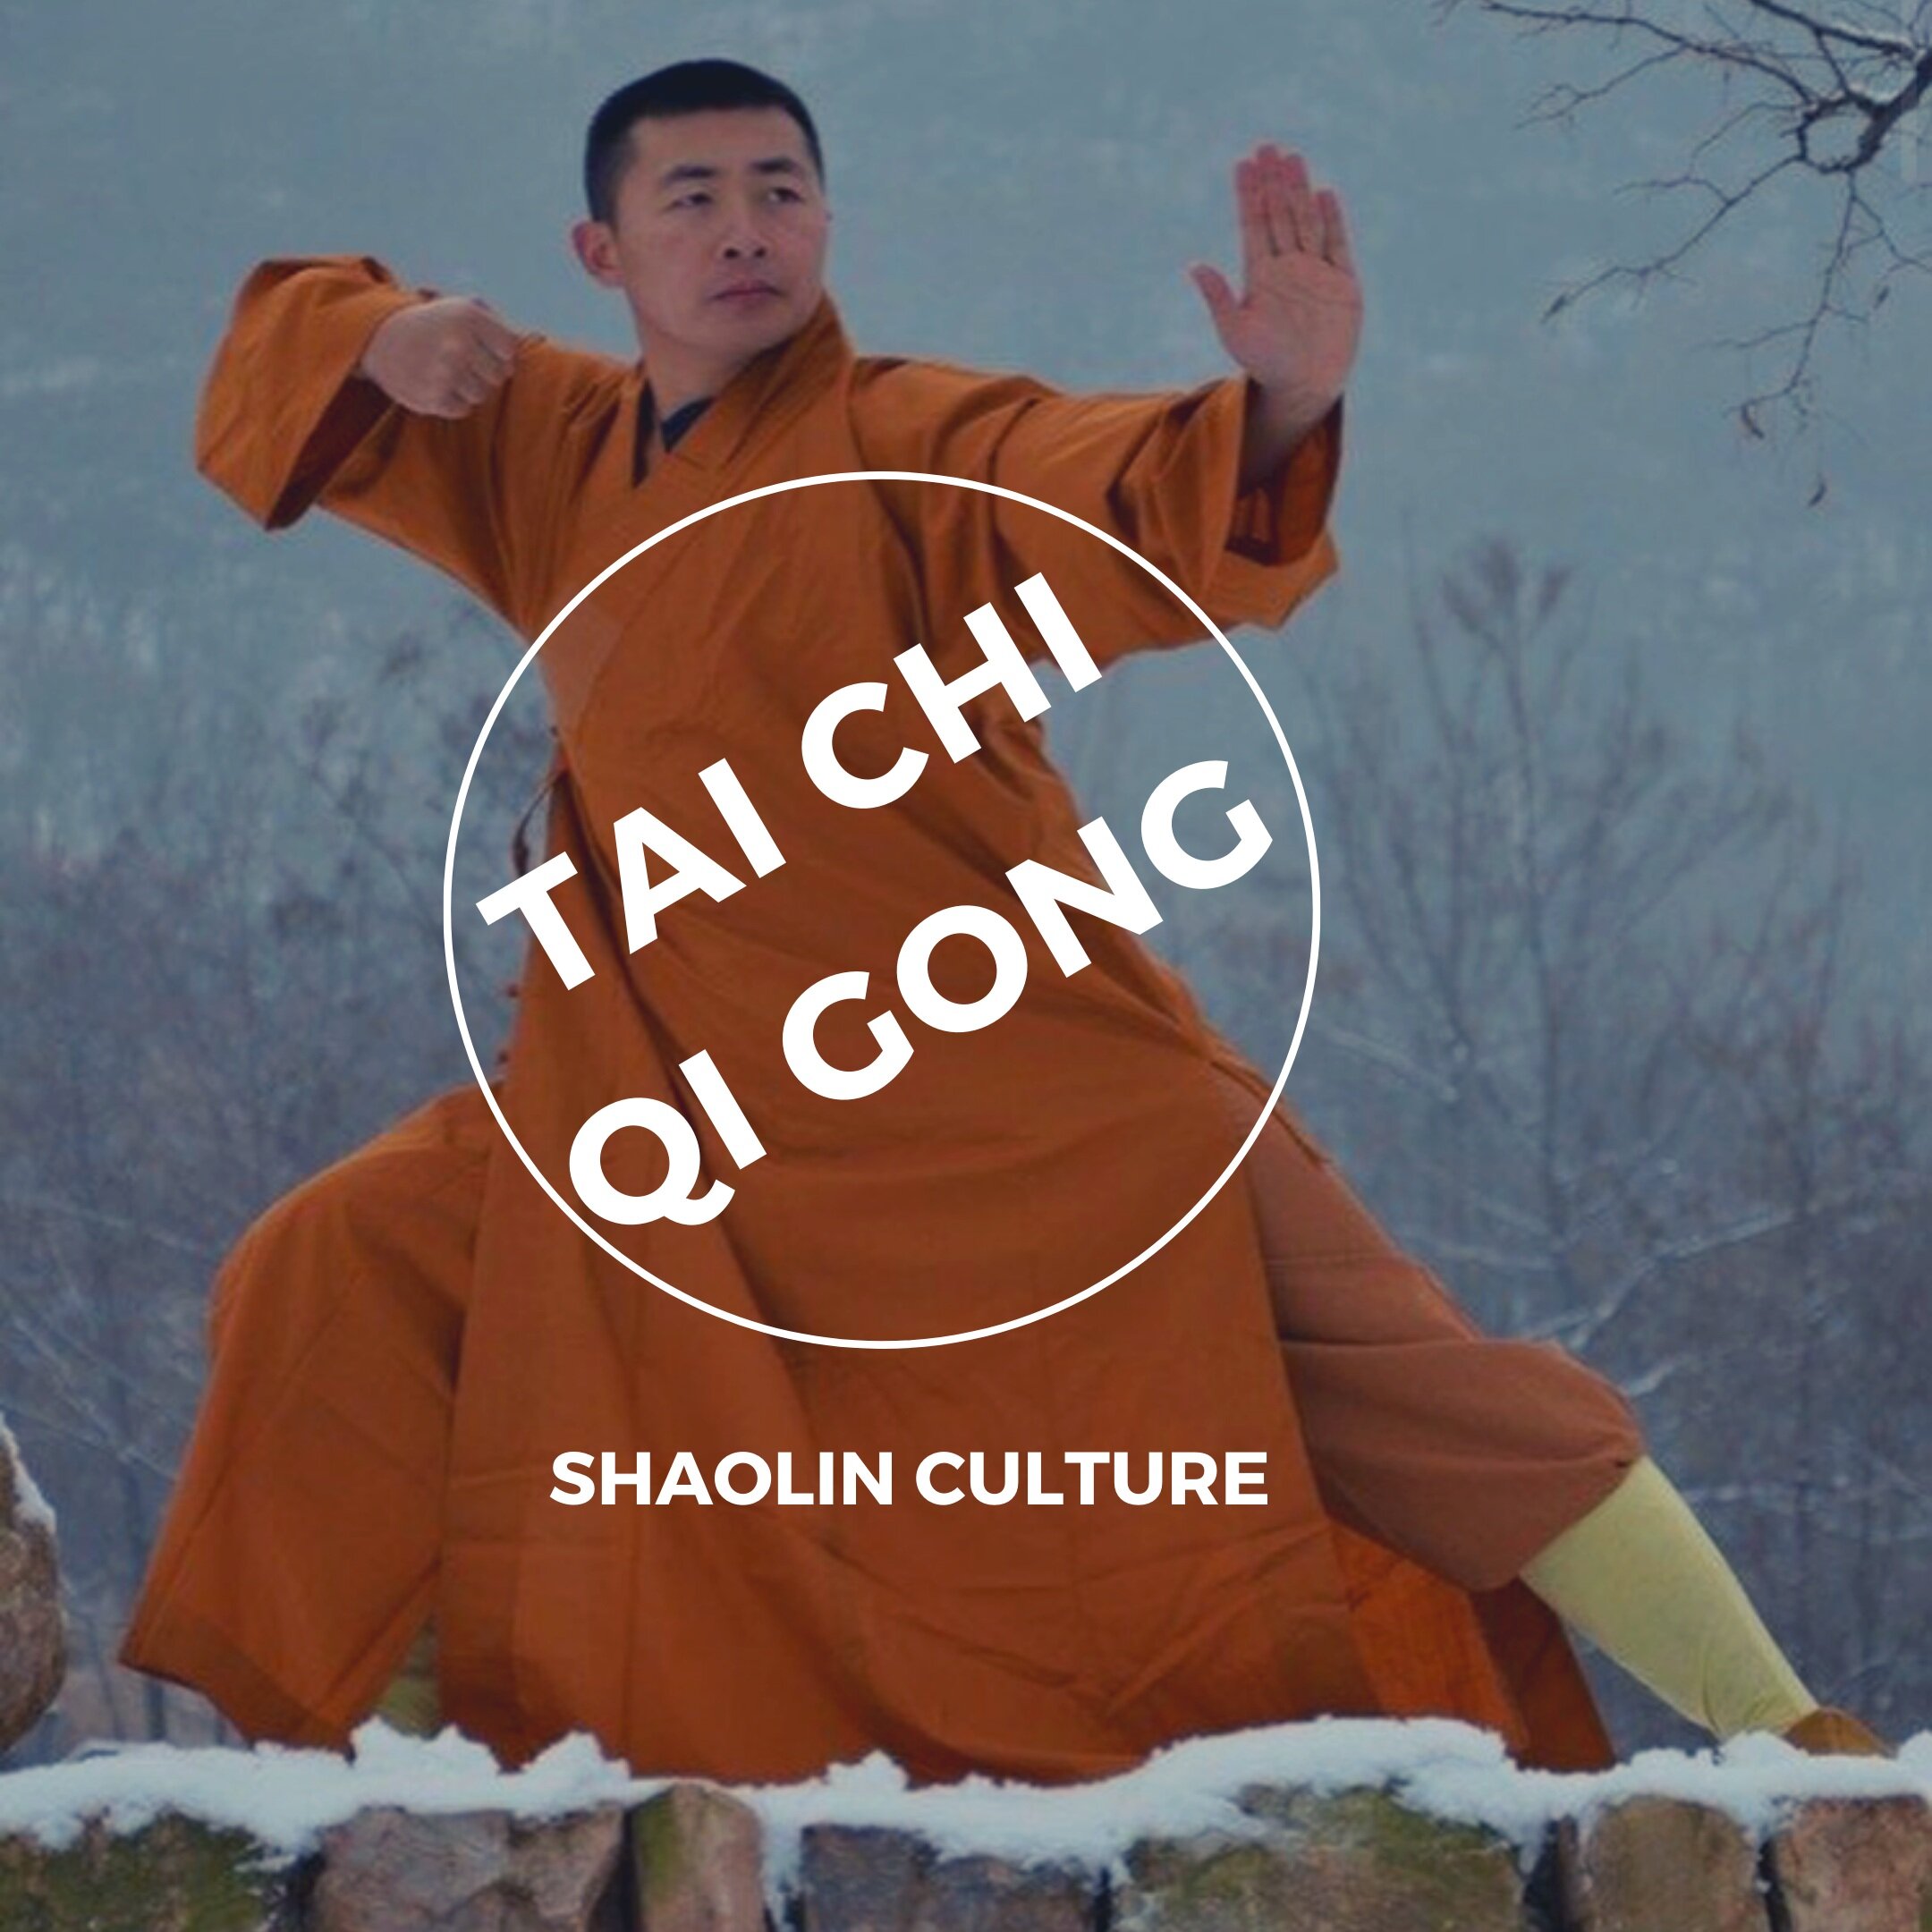 Shaolin kung fu returns - YP